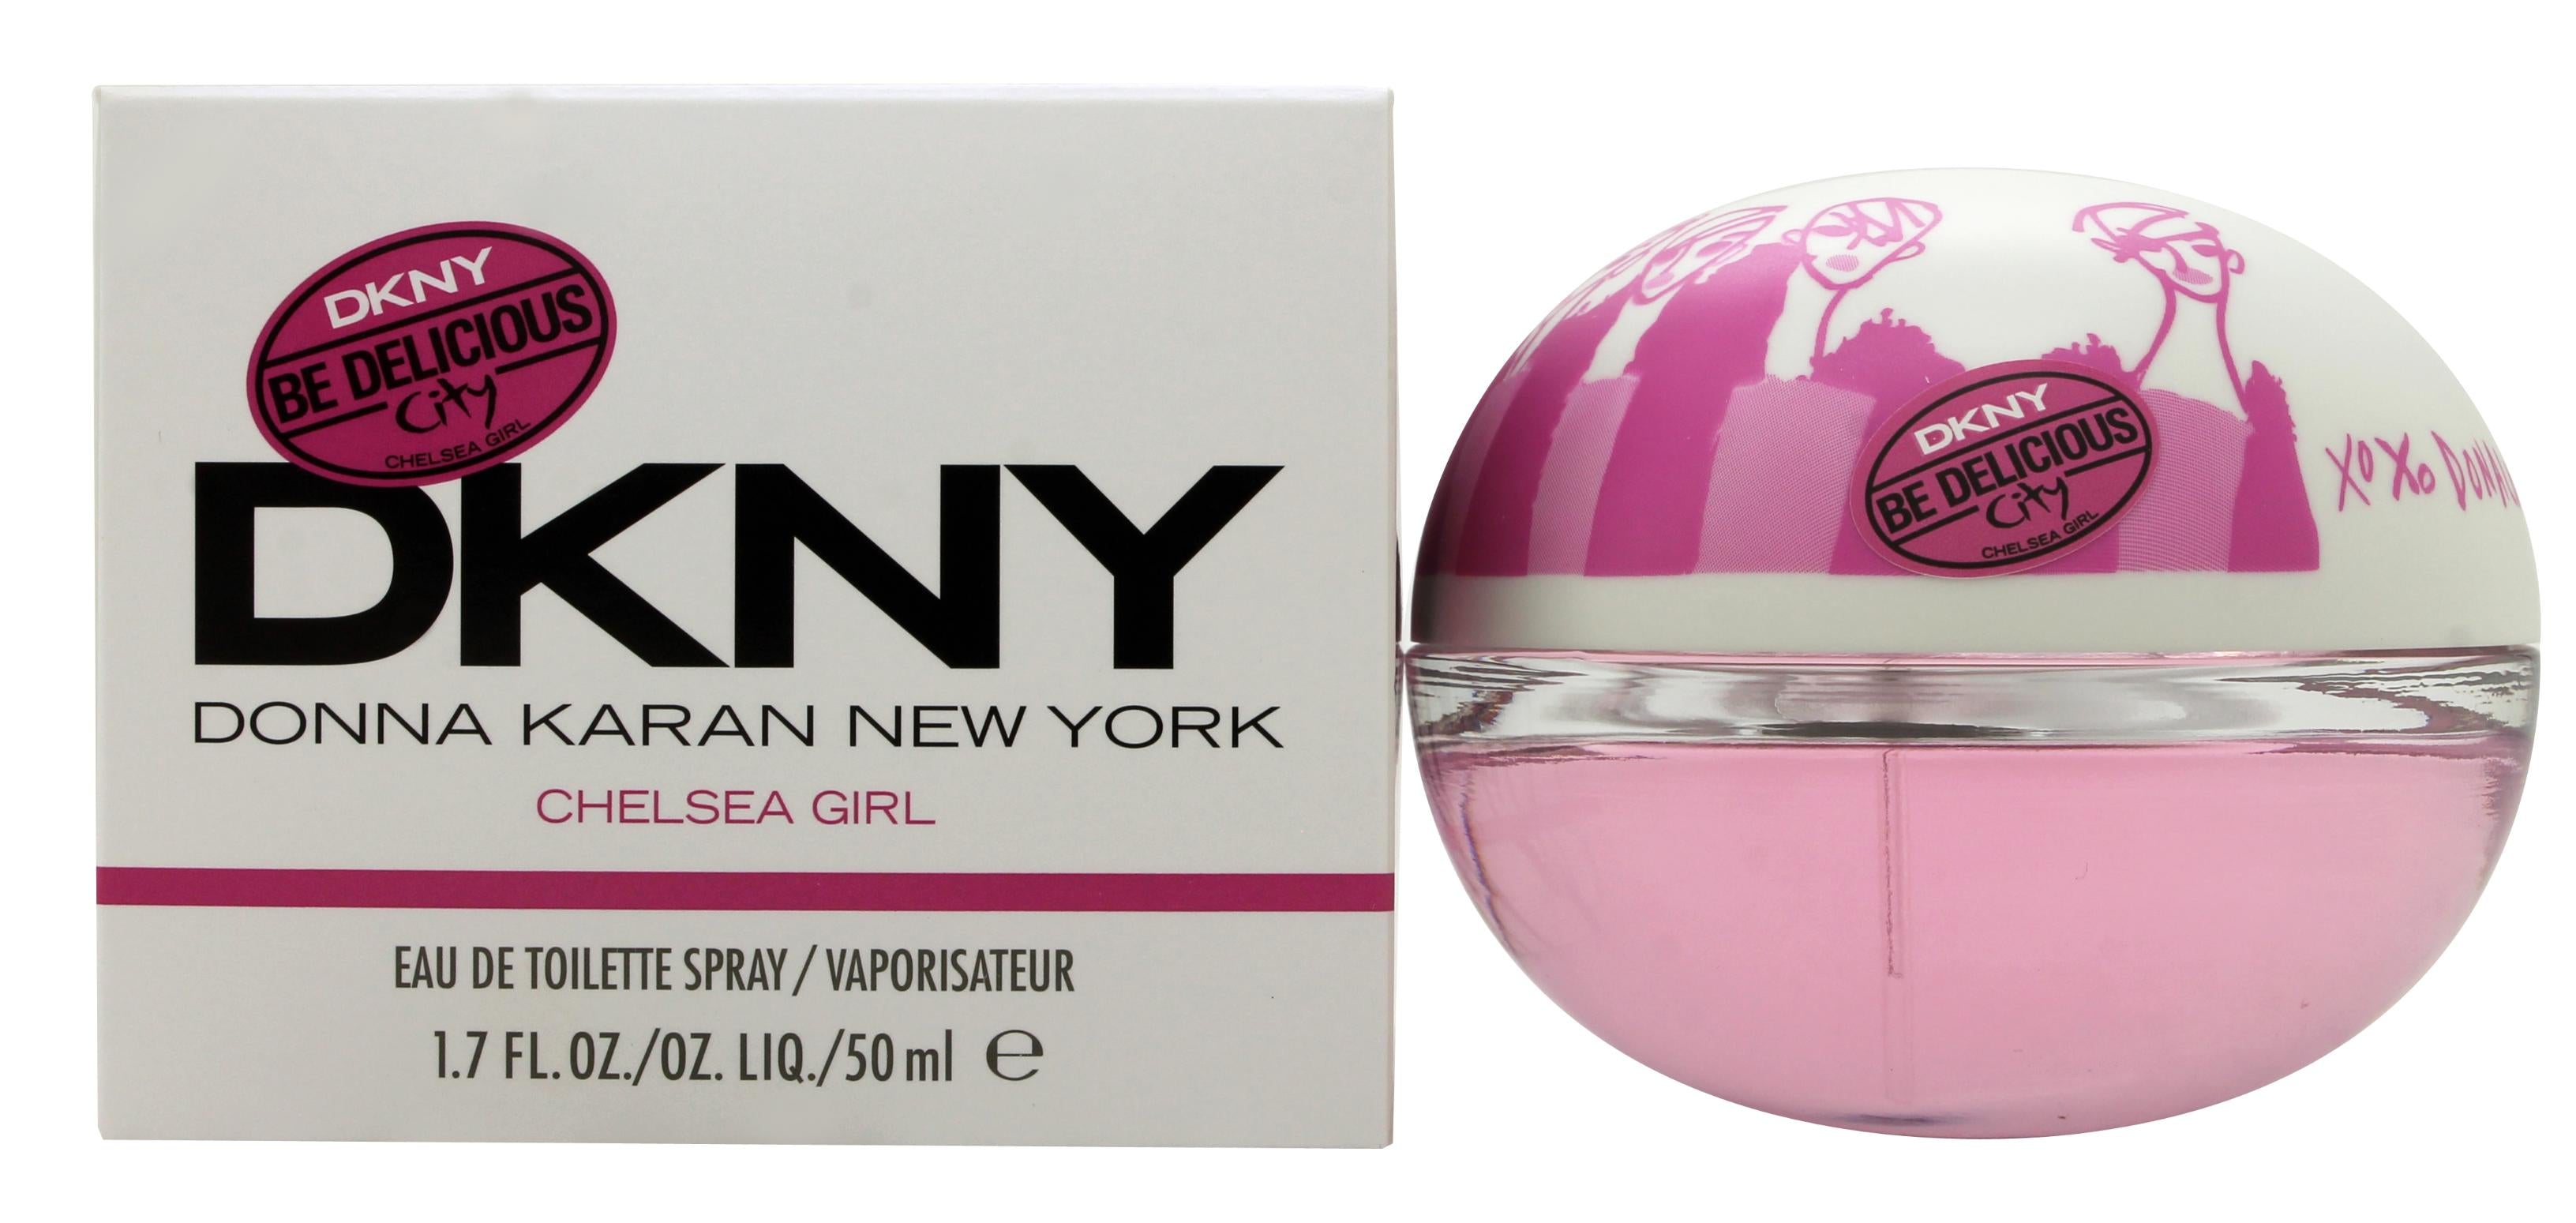 View DKNY Be Delicious City Chelsea Girl Eau de Toilette 50ml Spray information